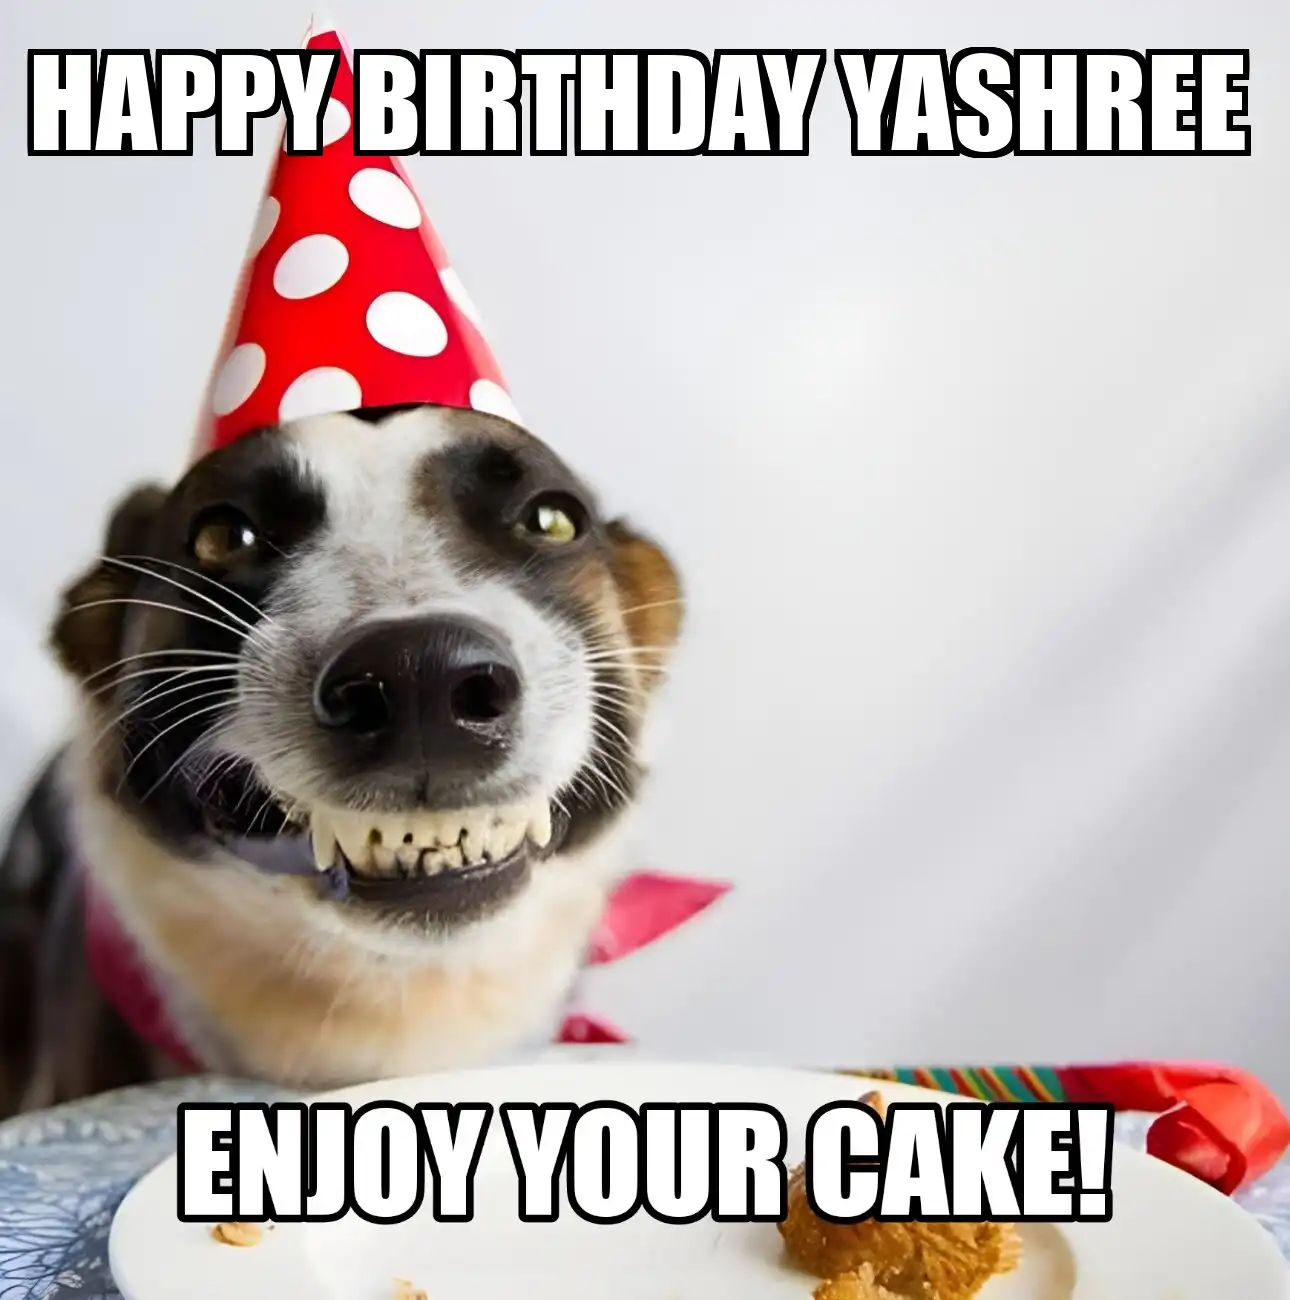 Happy Birthday Yashree Enjoy Your Cake Dog Meme